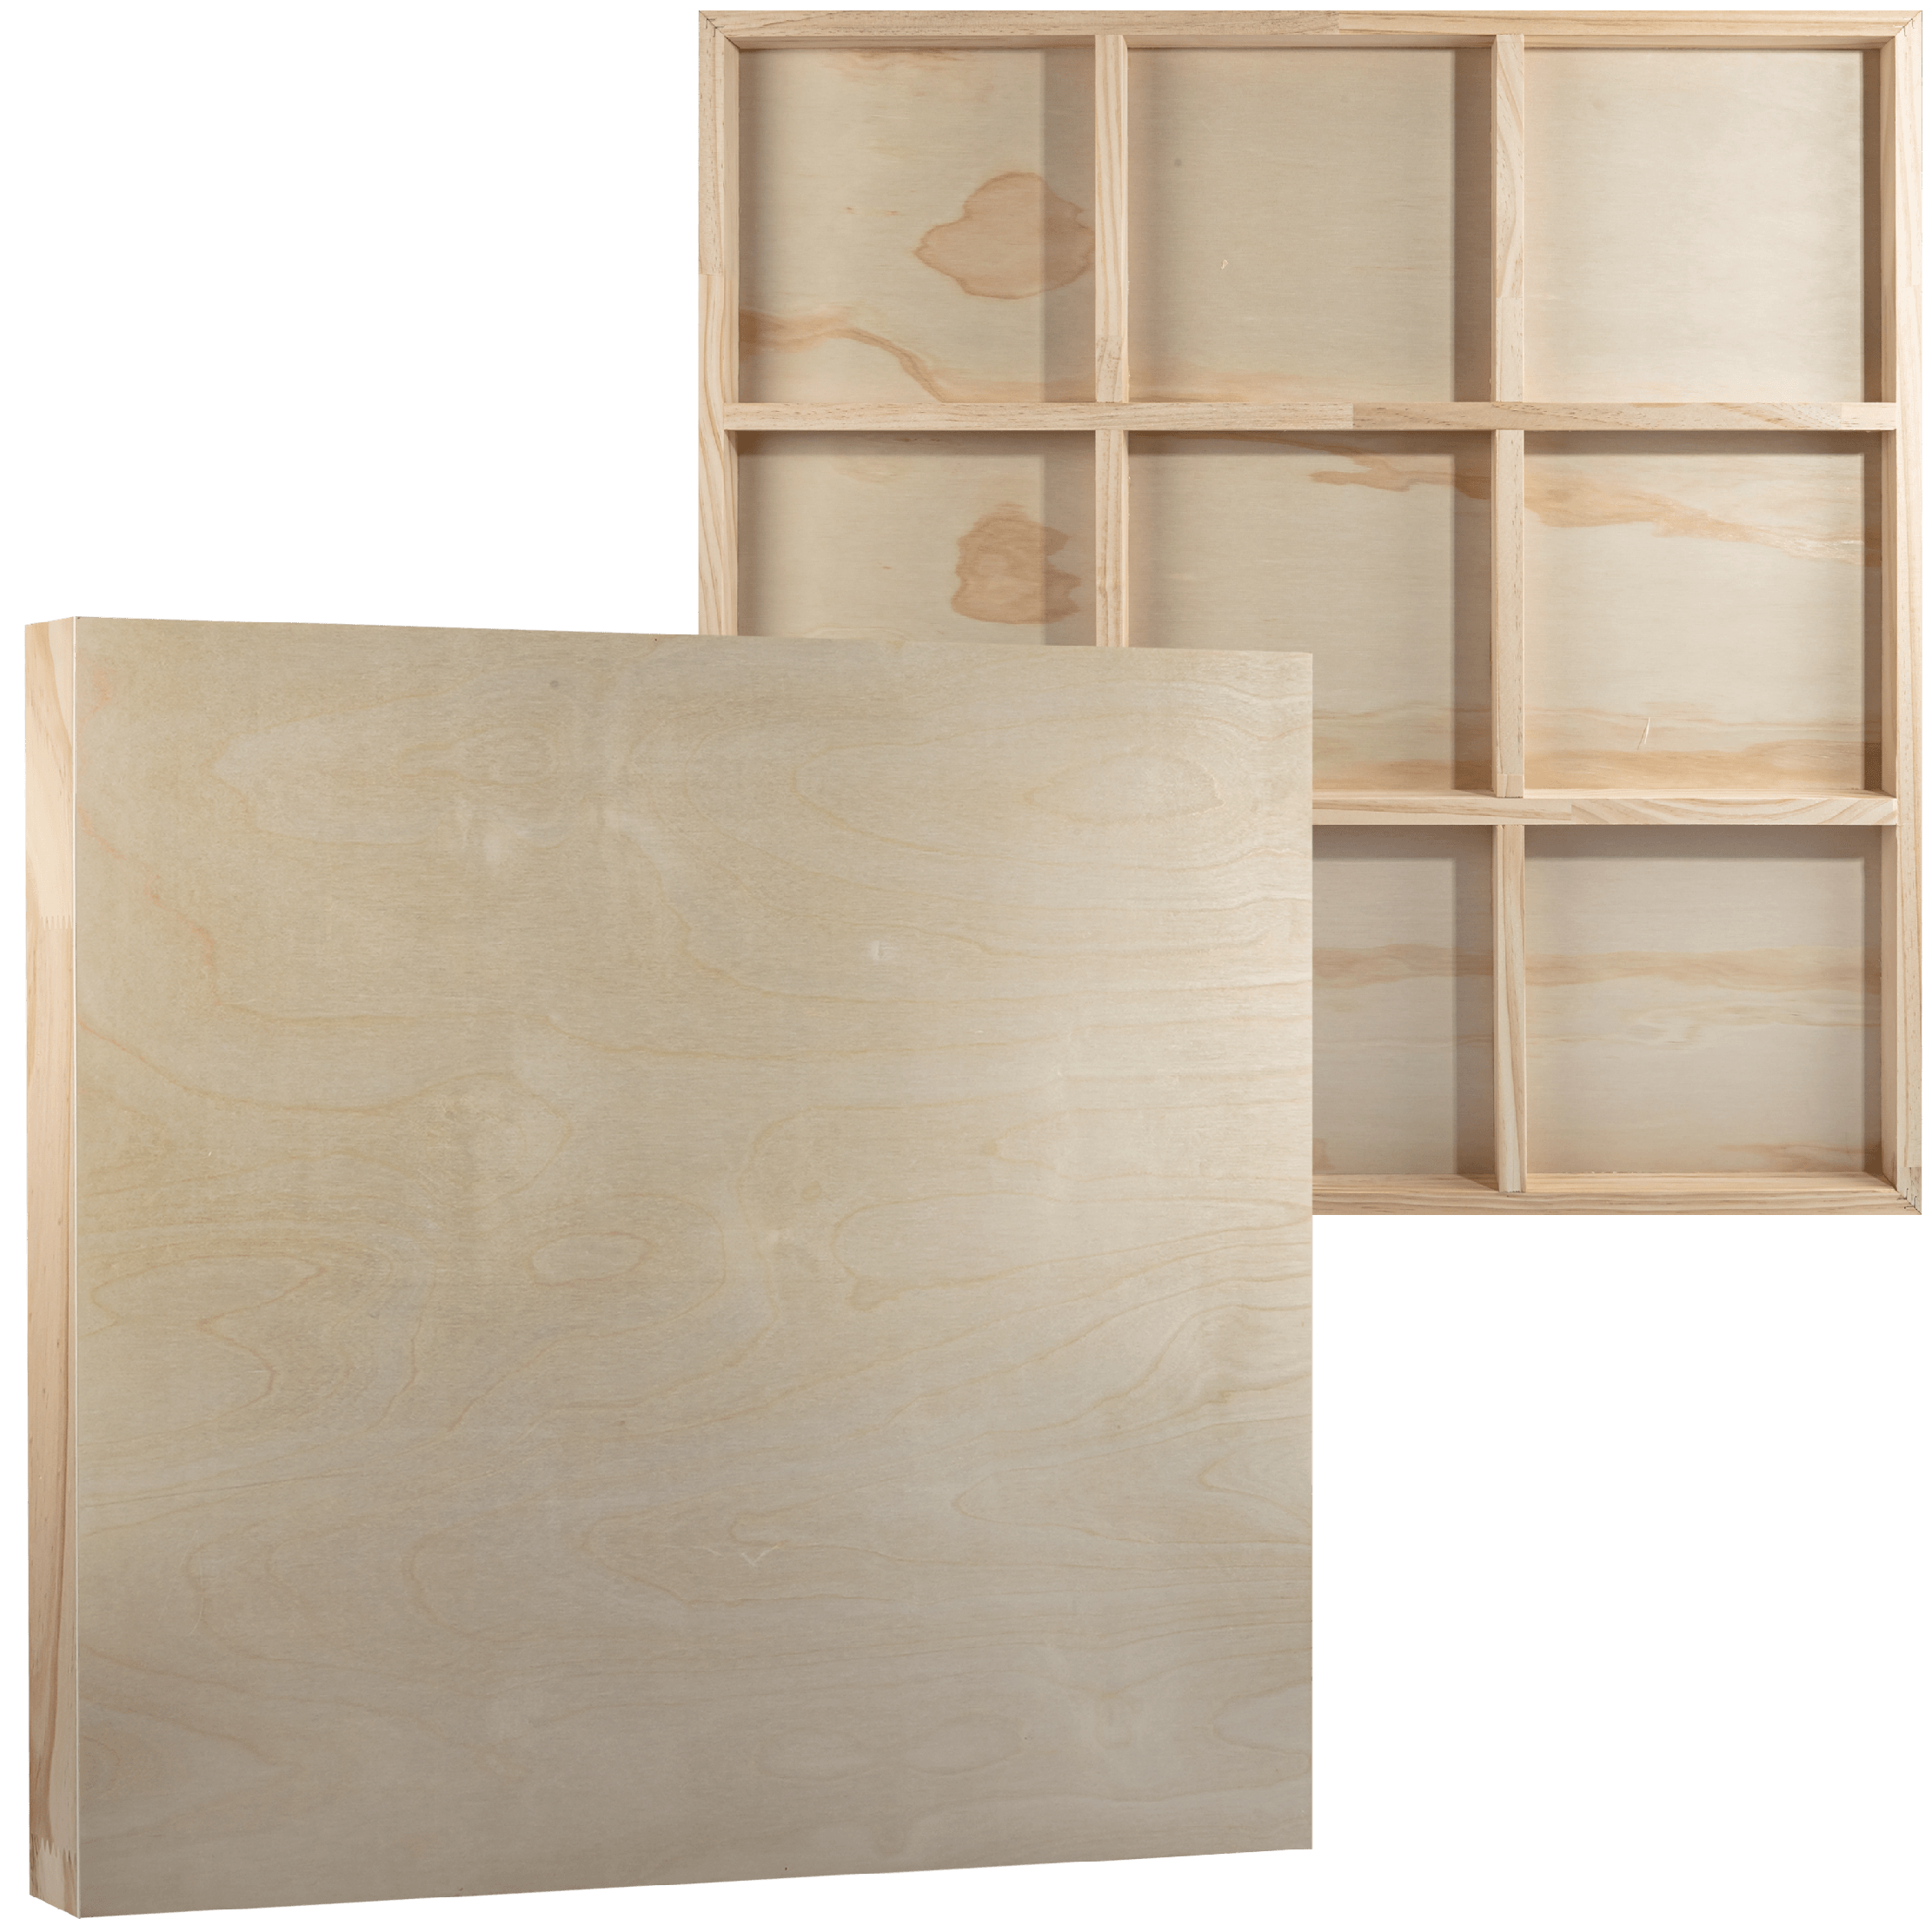 Image of The Art Studio Wooden Panel 30"x30" (76x76cm)